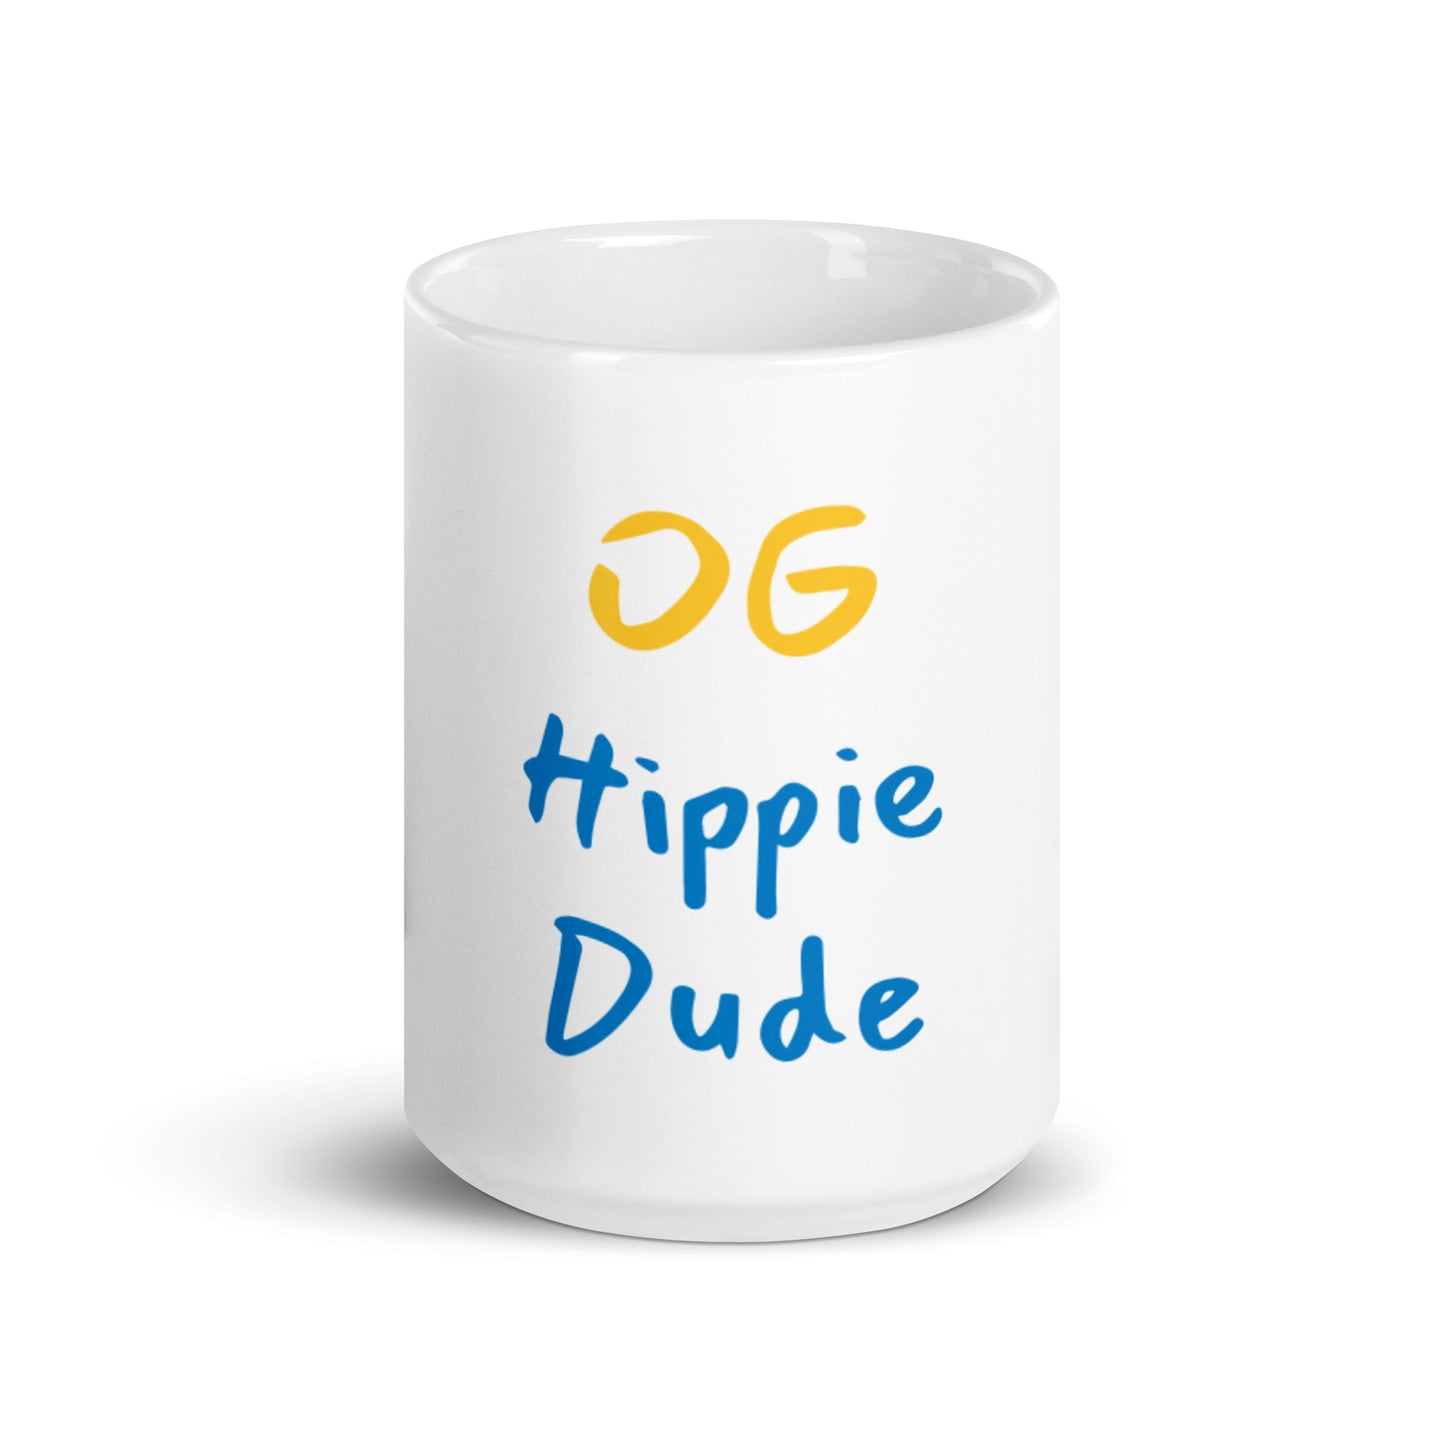 Mug blanc brillant - OG Hippie Dude